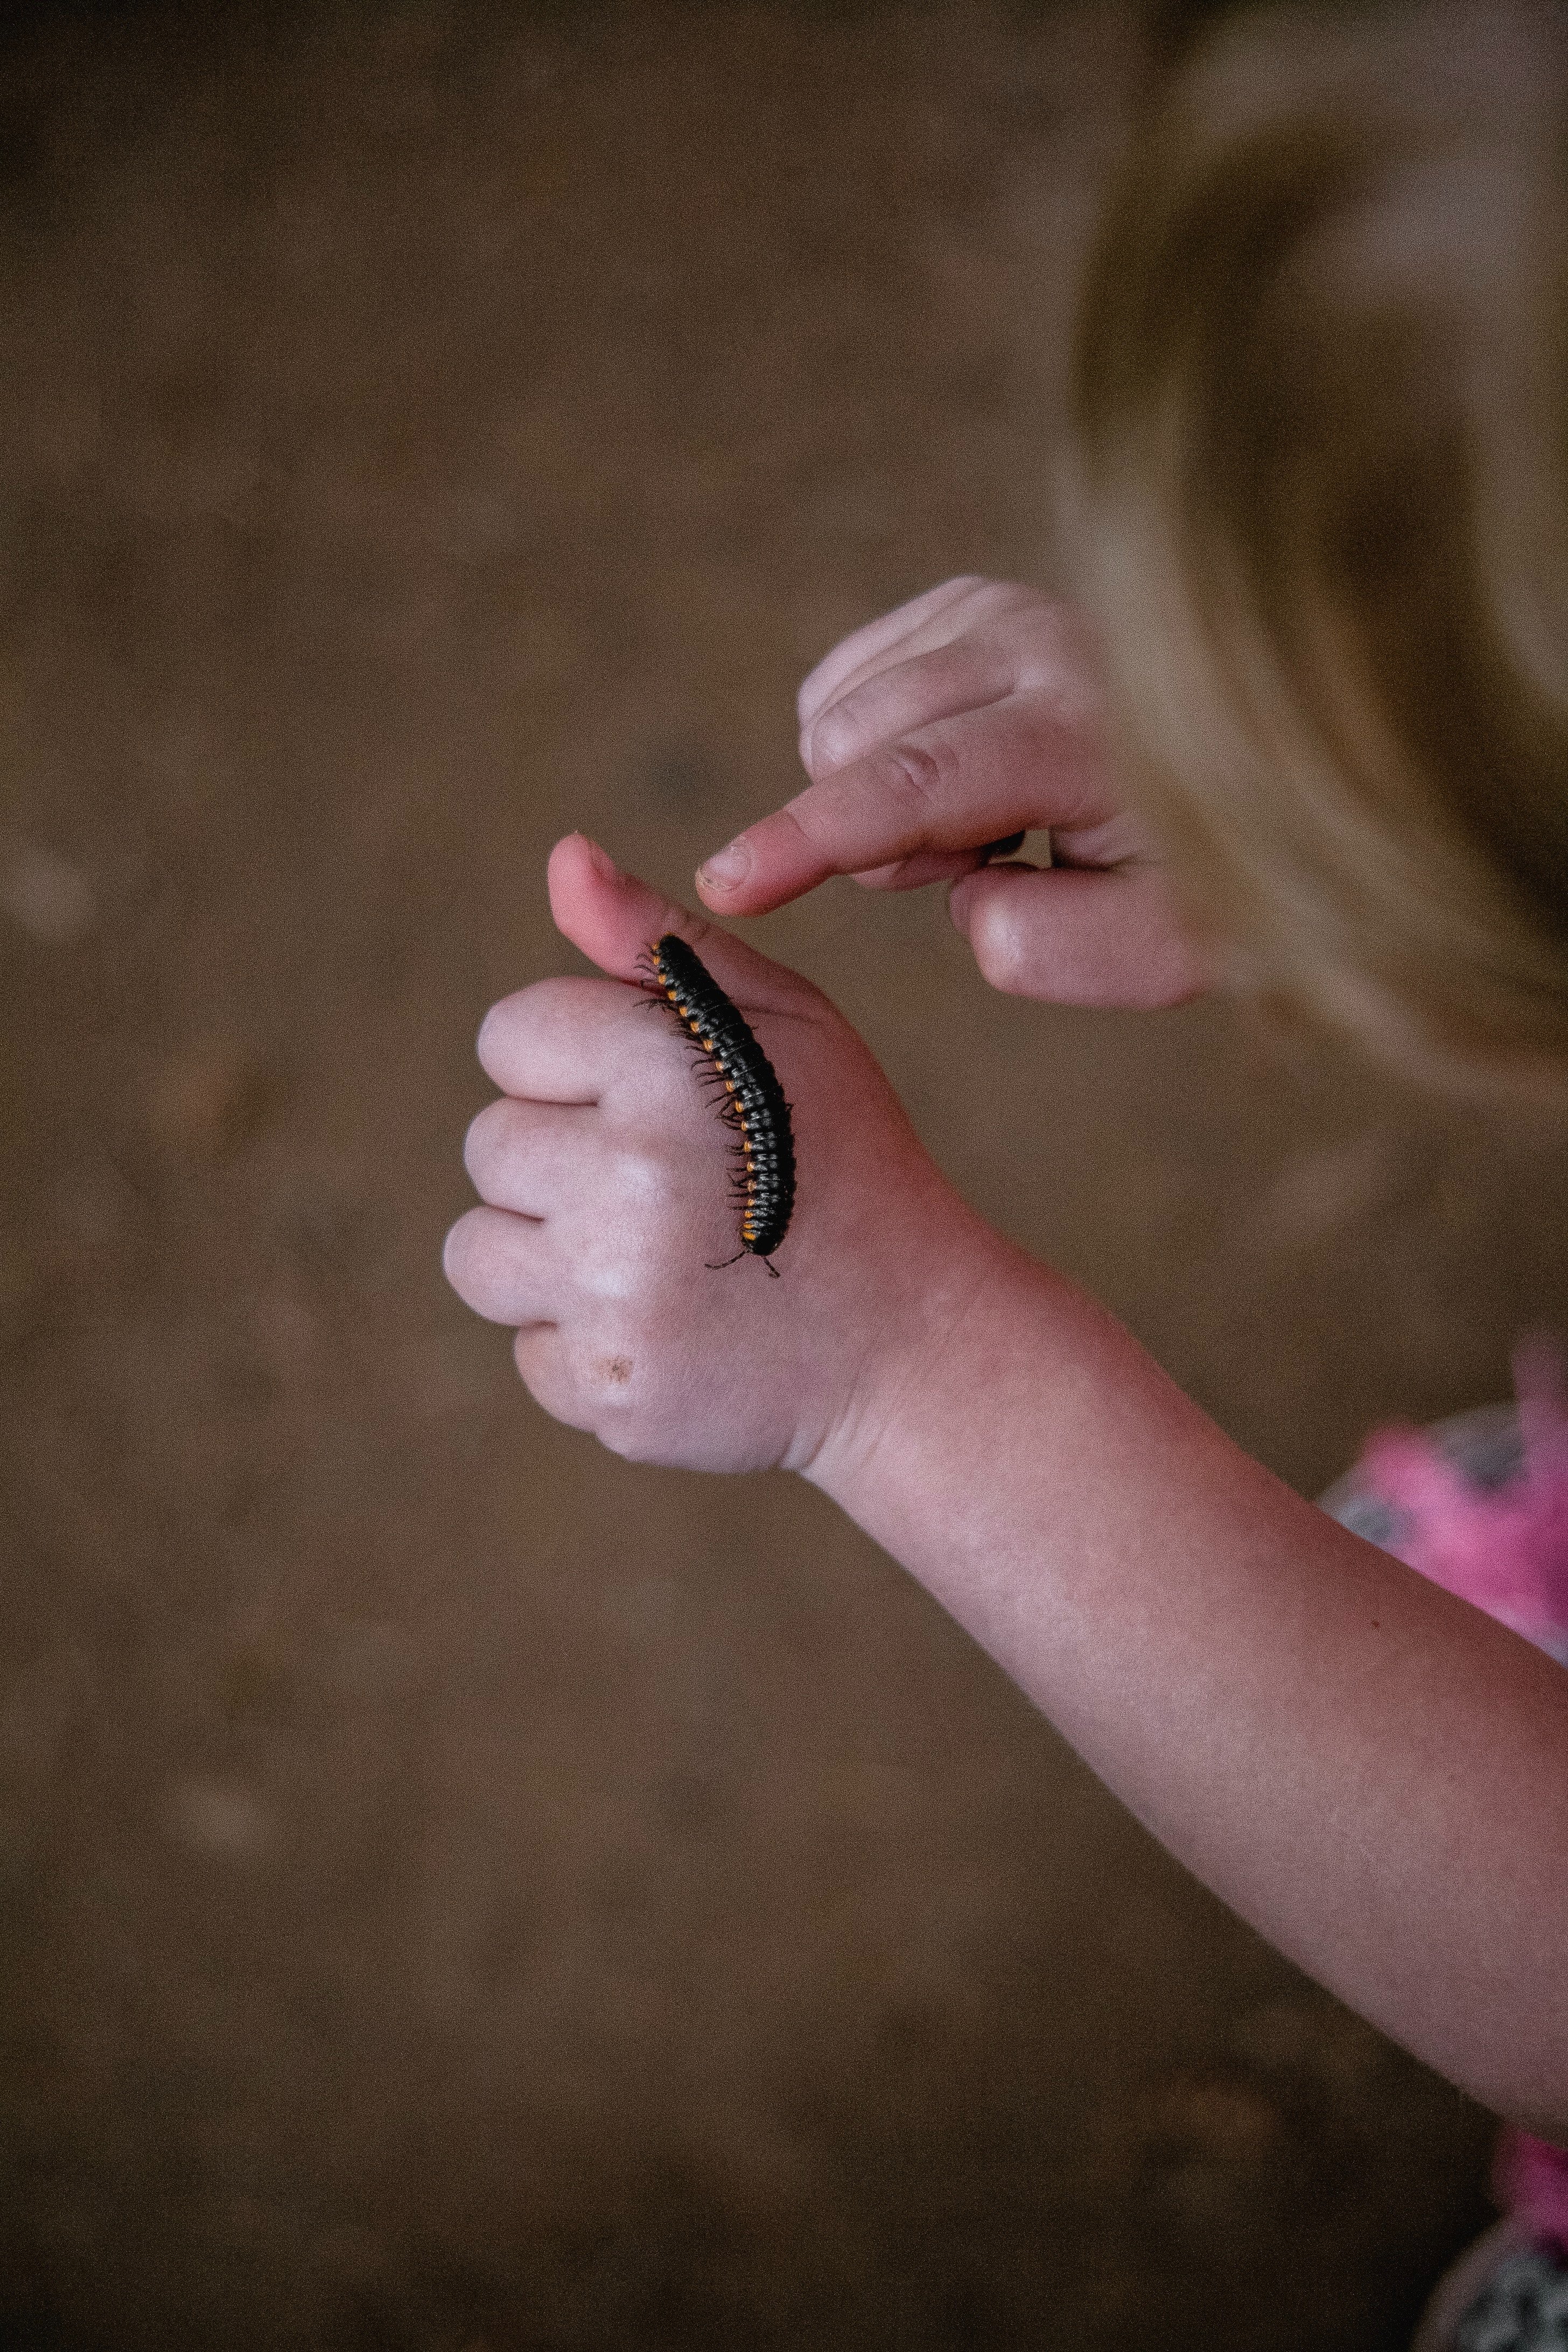 A centipede on a child's hand. | Source: Unsplash